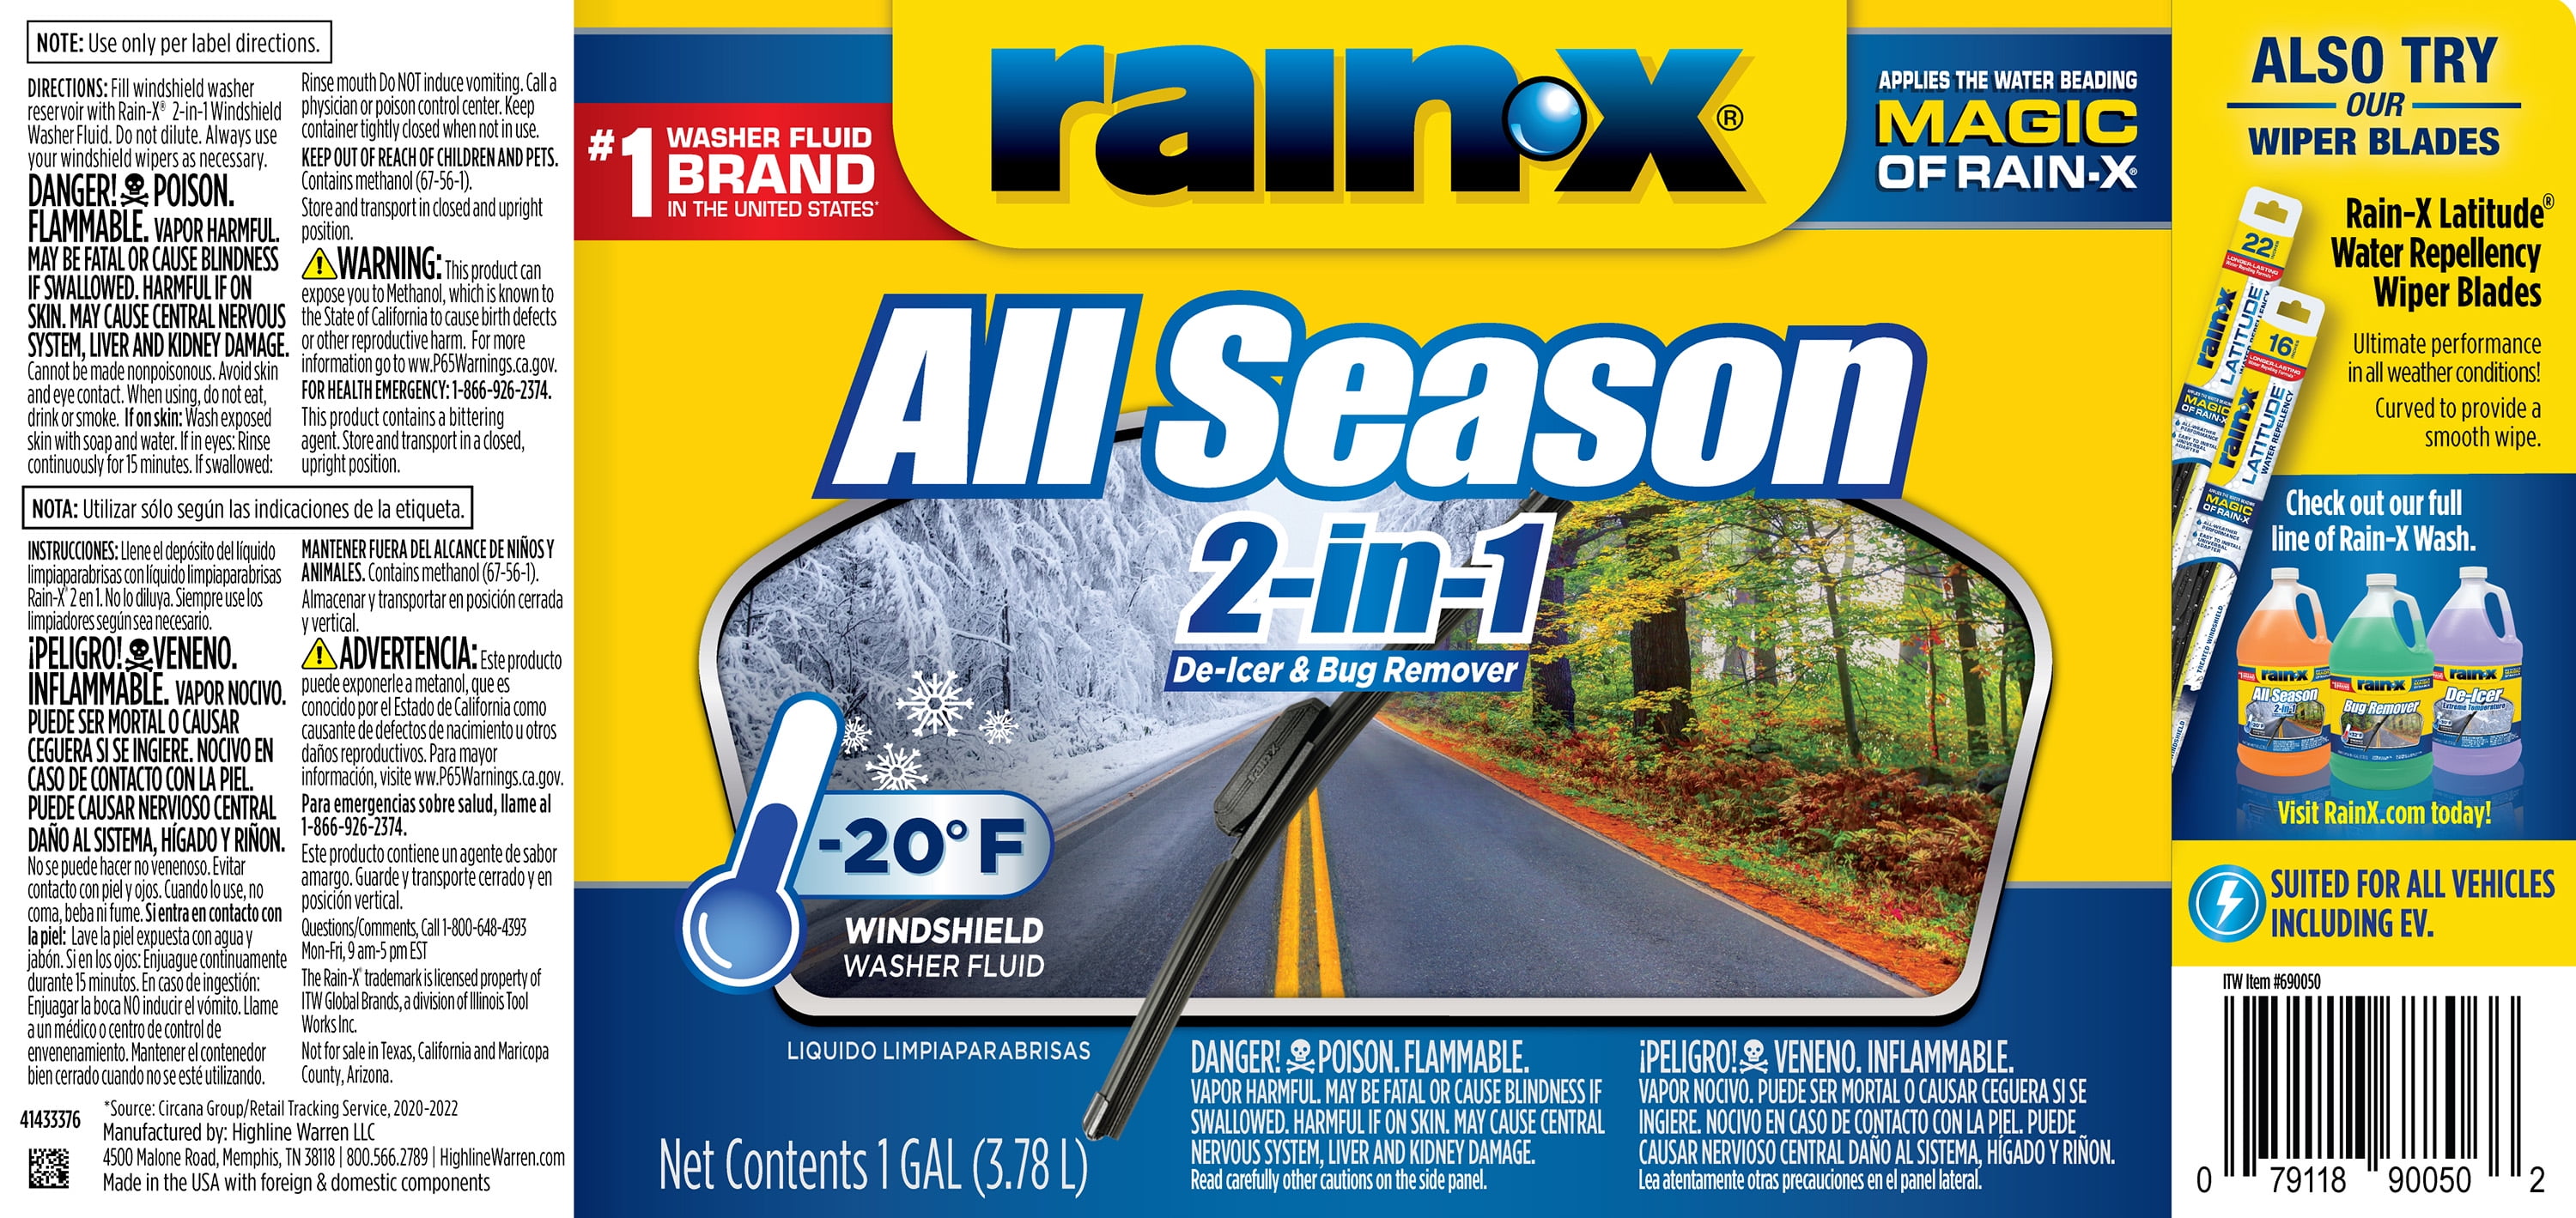 Windex All-Season Windshield Washer Fluid Gallon Only $1.45 w